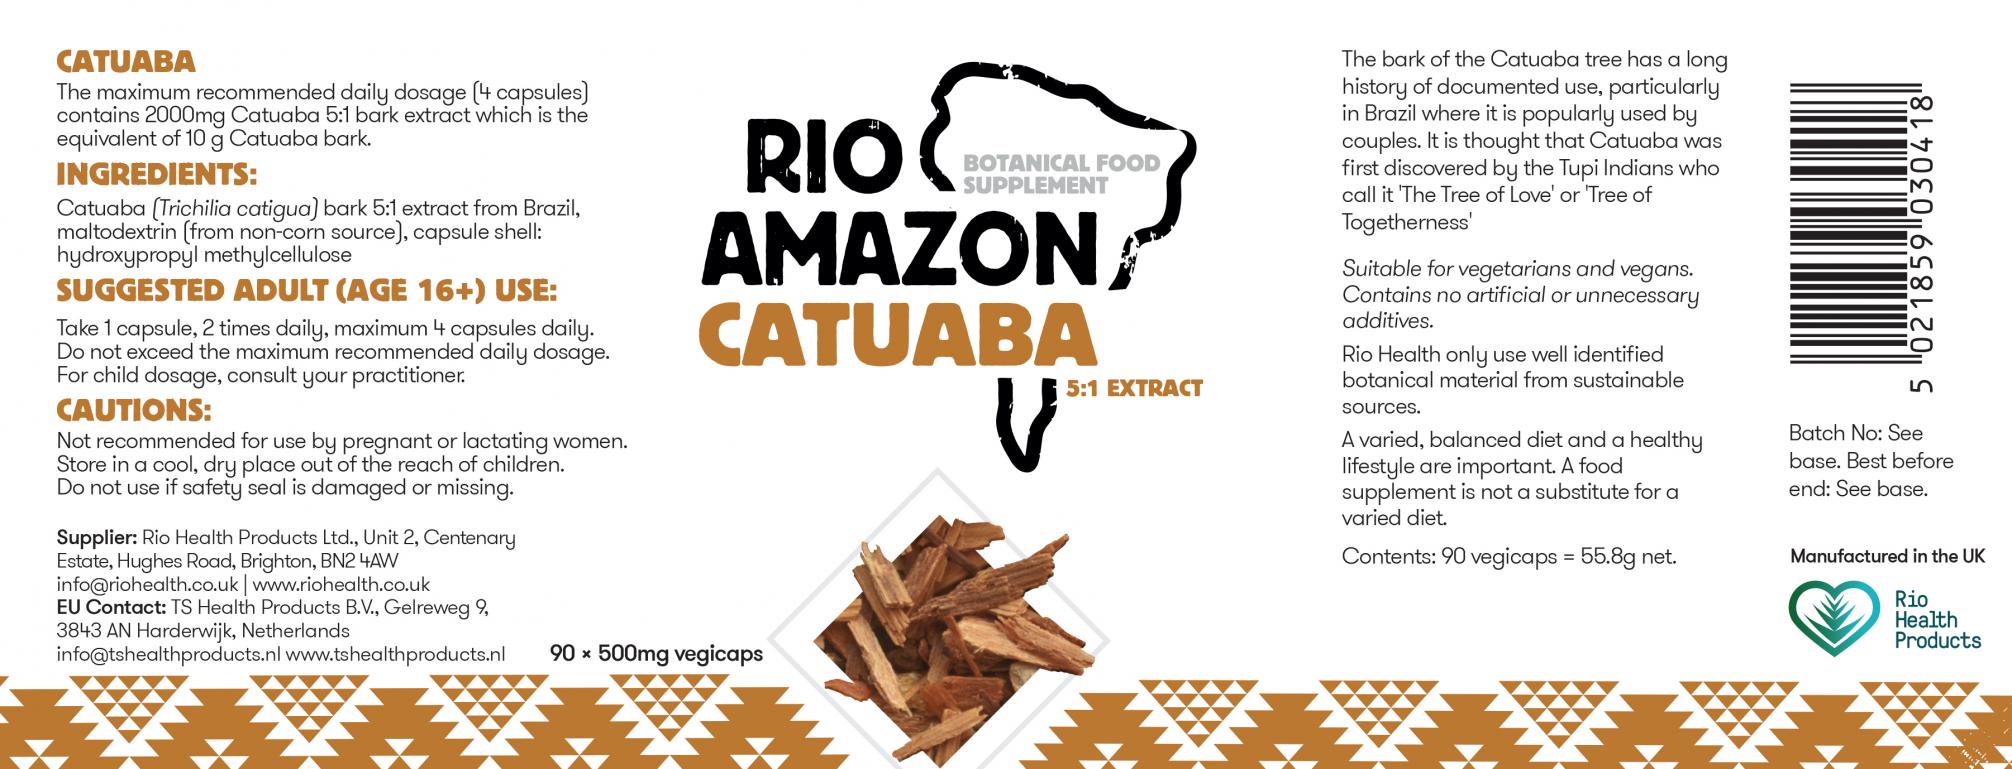 Rio Amazon Catuaba 5:1 Extract 500mg 90's